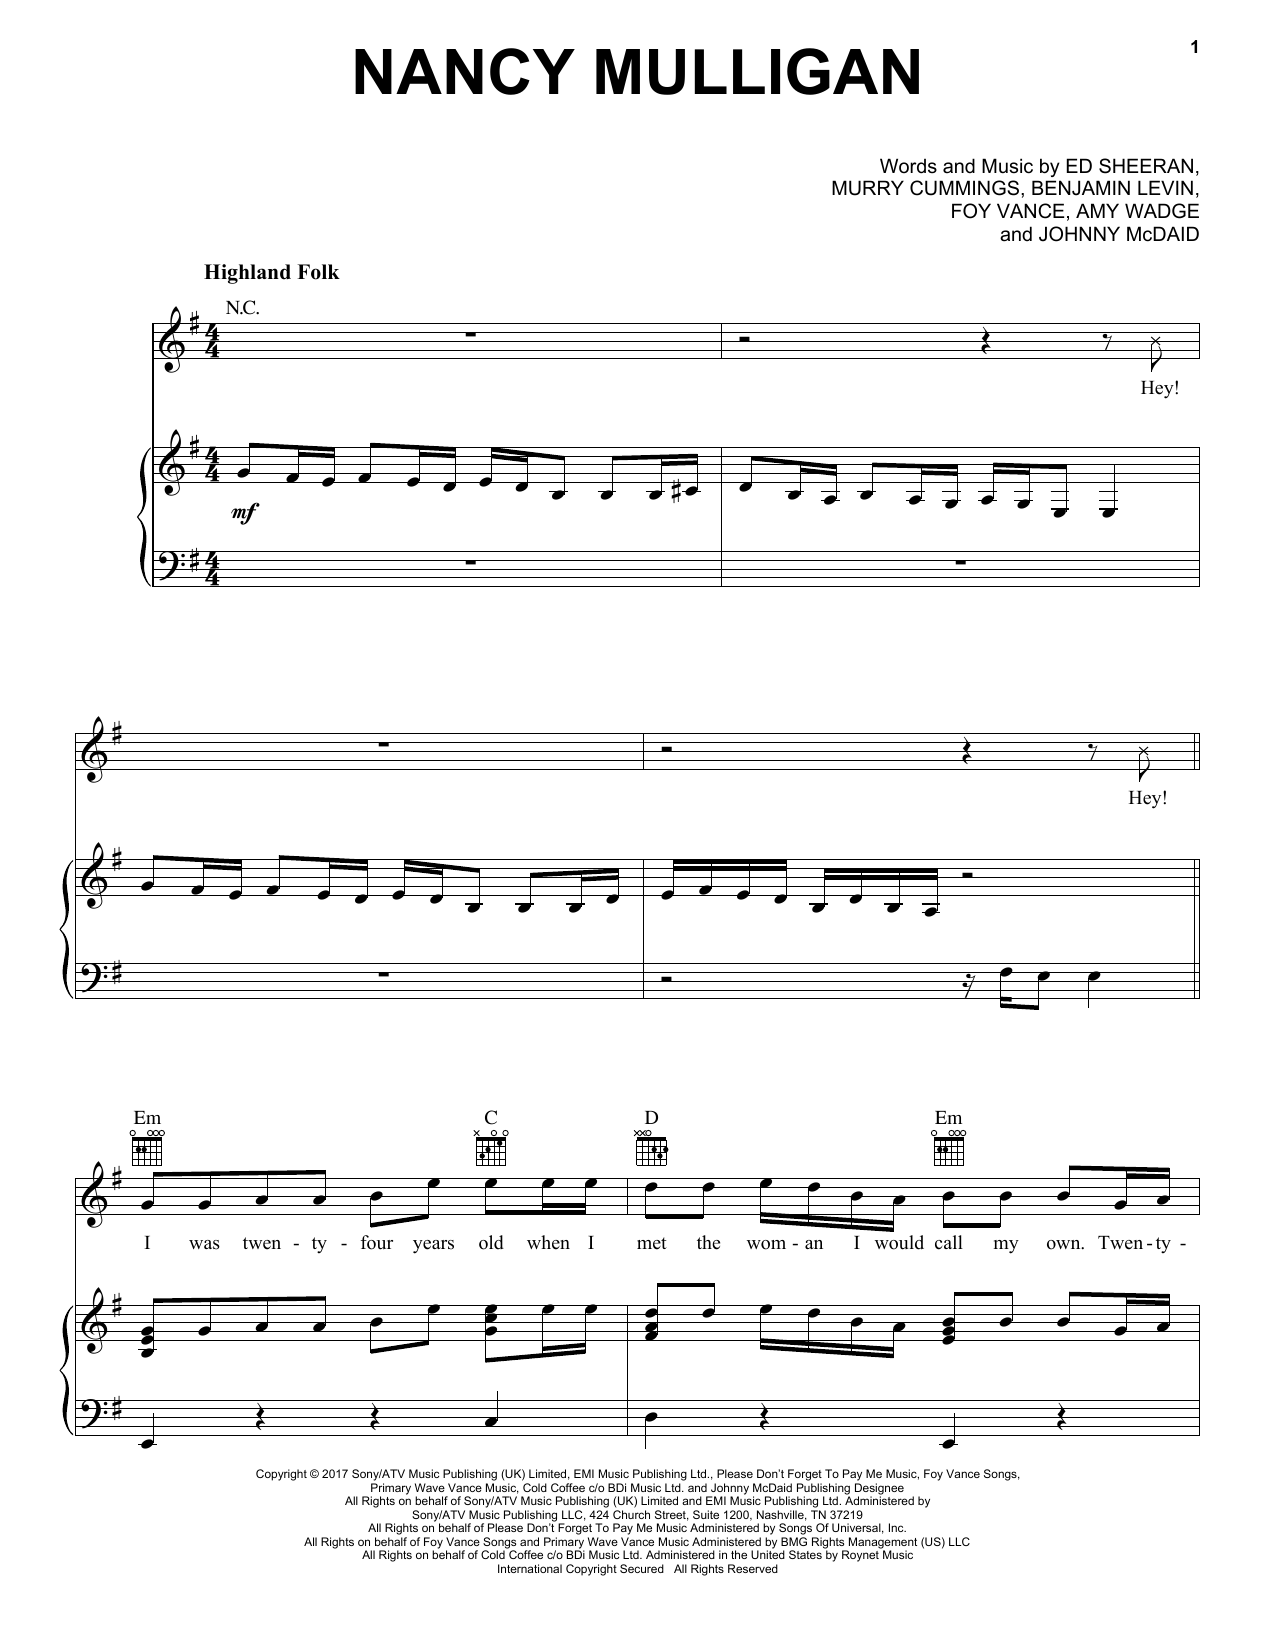 Ed Sheeran Nancy Mulligan Sheet Music Notes & Chords for Guitar Tab - Download or Print PDF